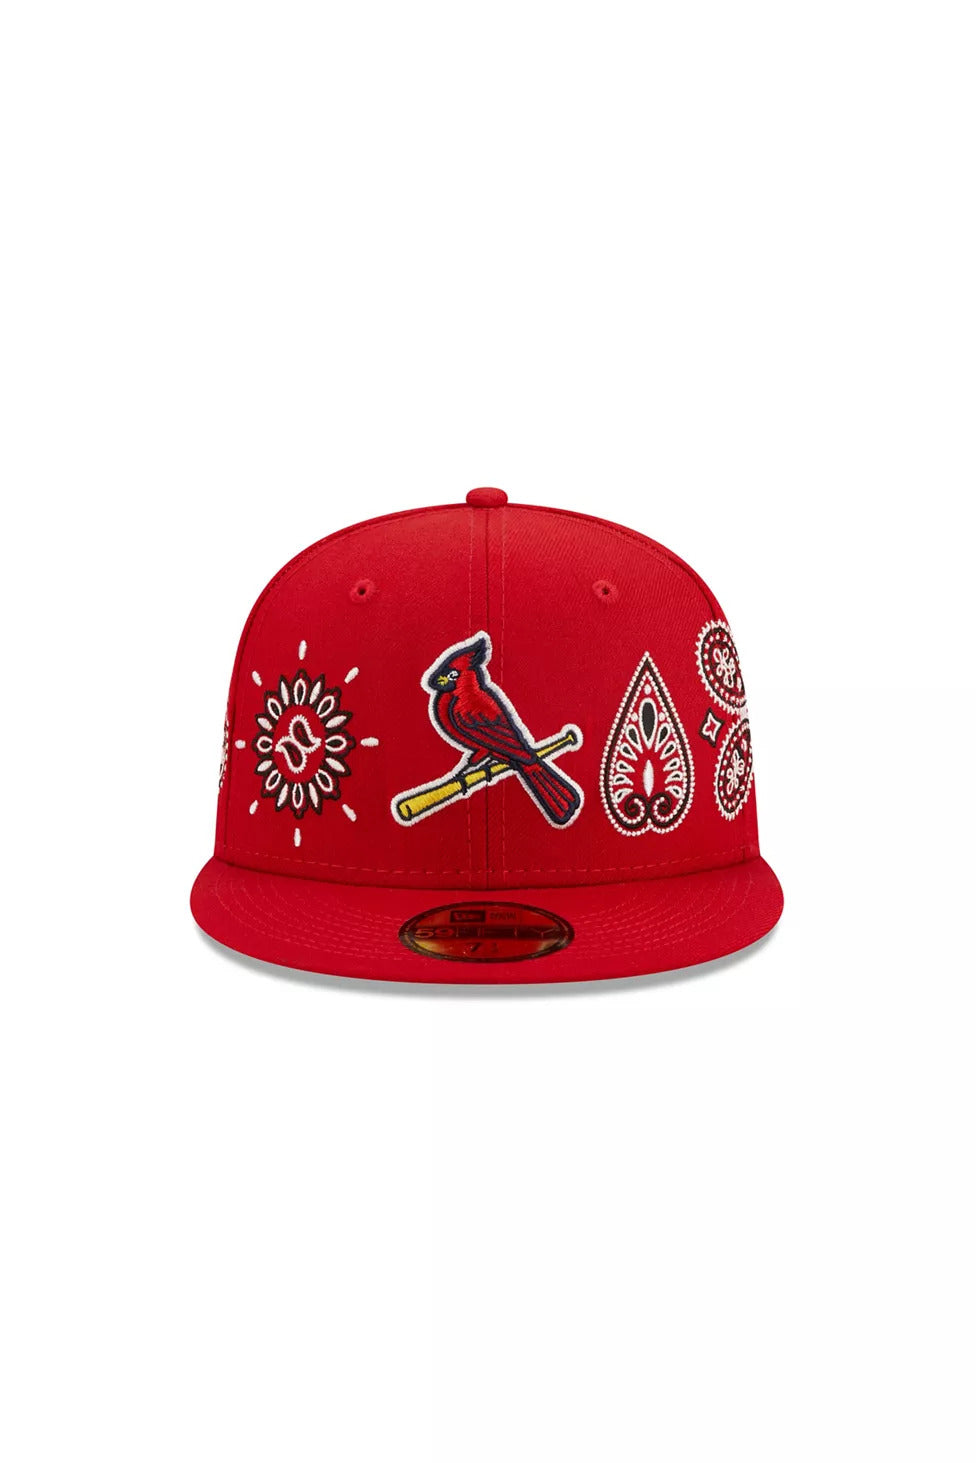 St. Louis Cardinals New Era Distressed Hat Cap Snapback Red Large Logo  Womens